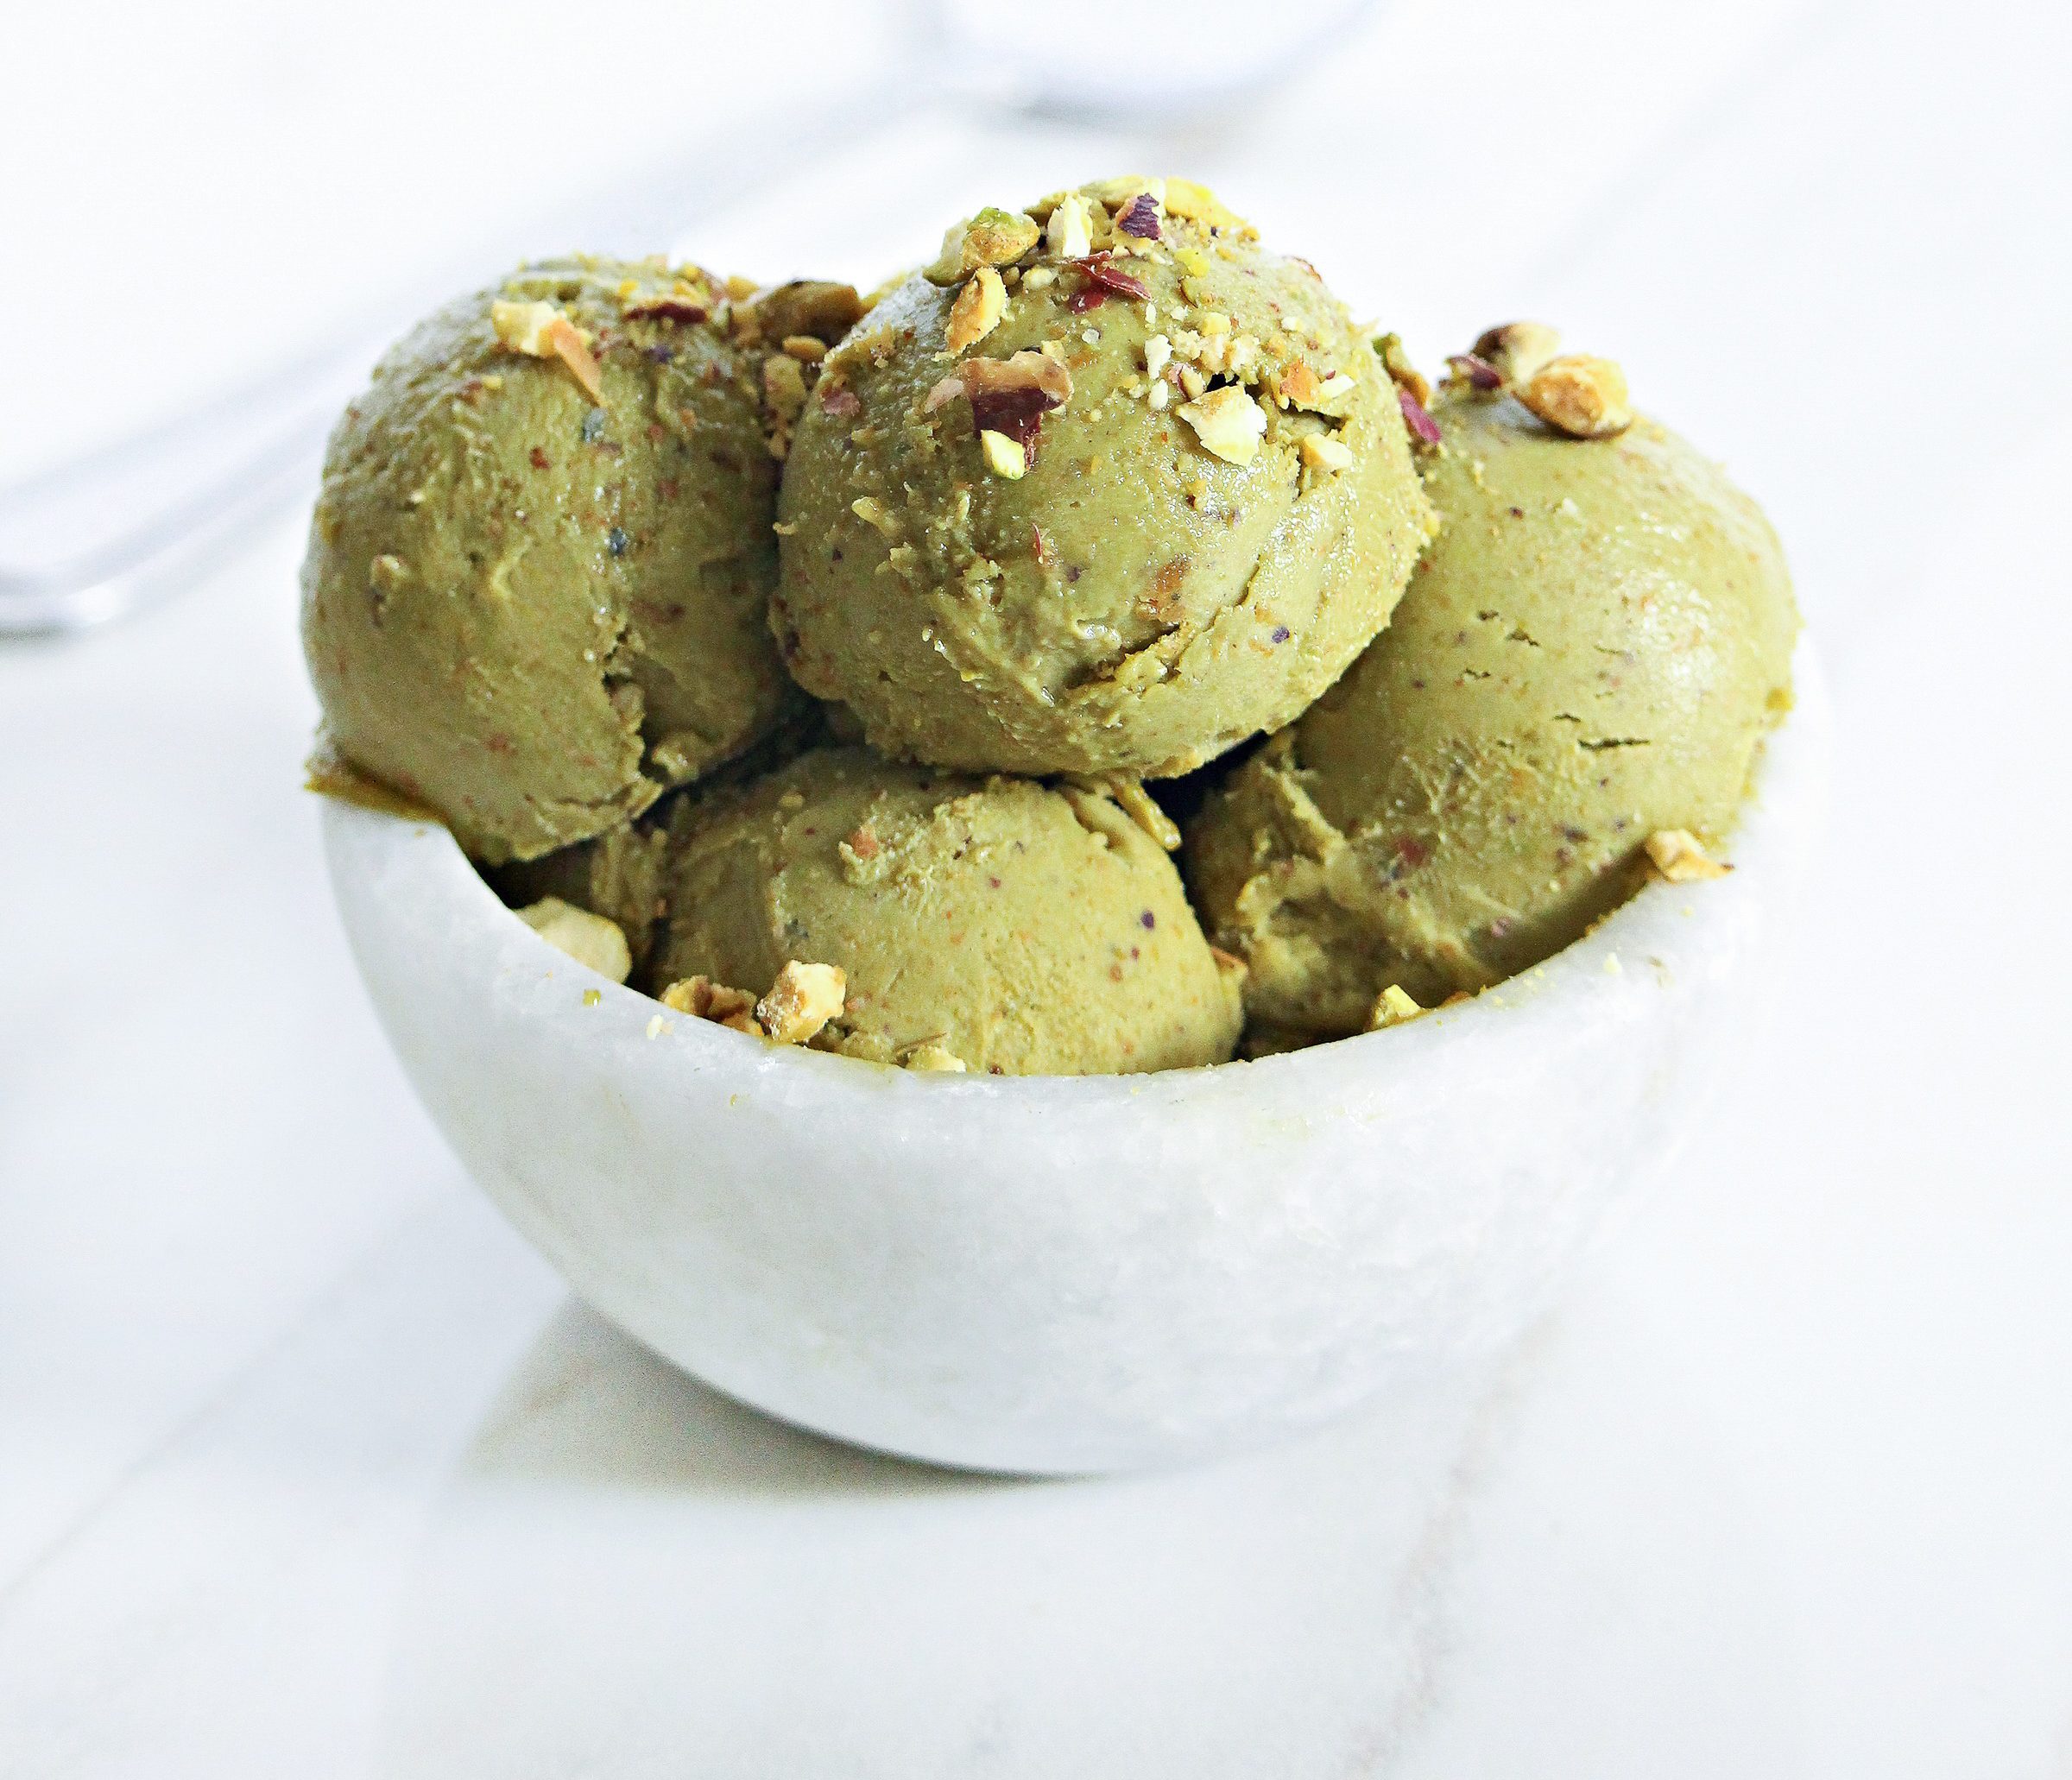 vegan, gluten-free and refined sugar-free pistachio avocado ice cream